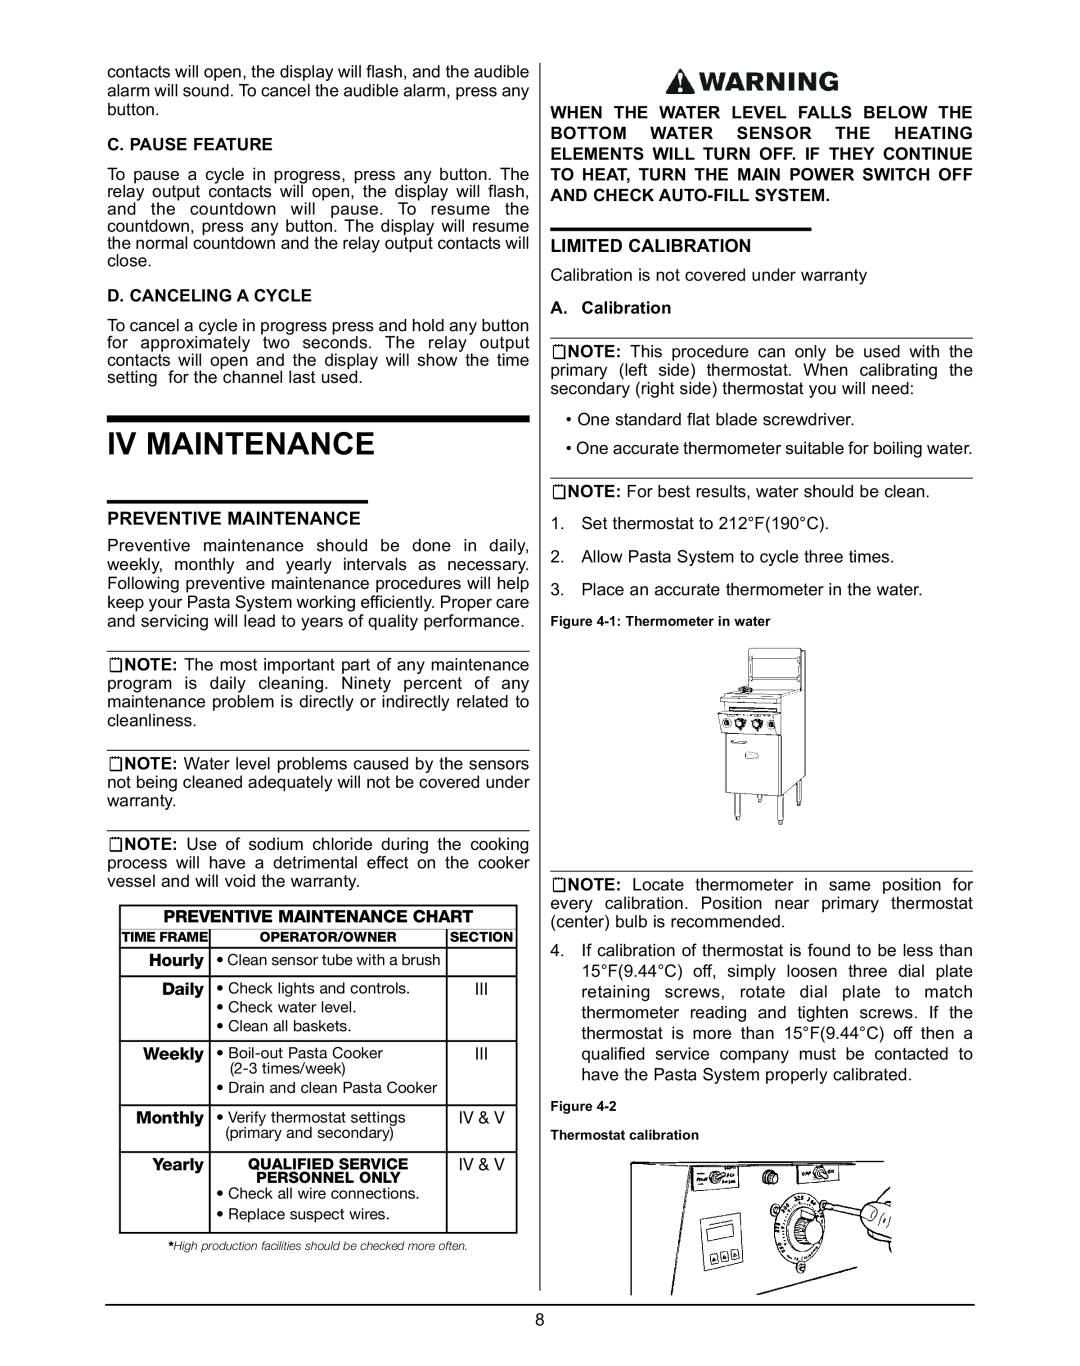 Keating Of Chicago 240V service manual Iv Maintenance, Preventive Maintenance, Limited Calibration 